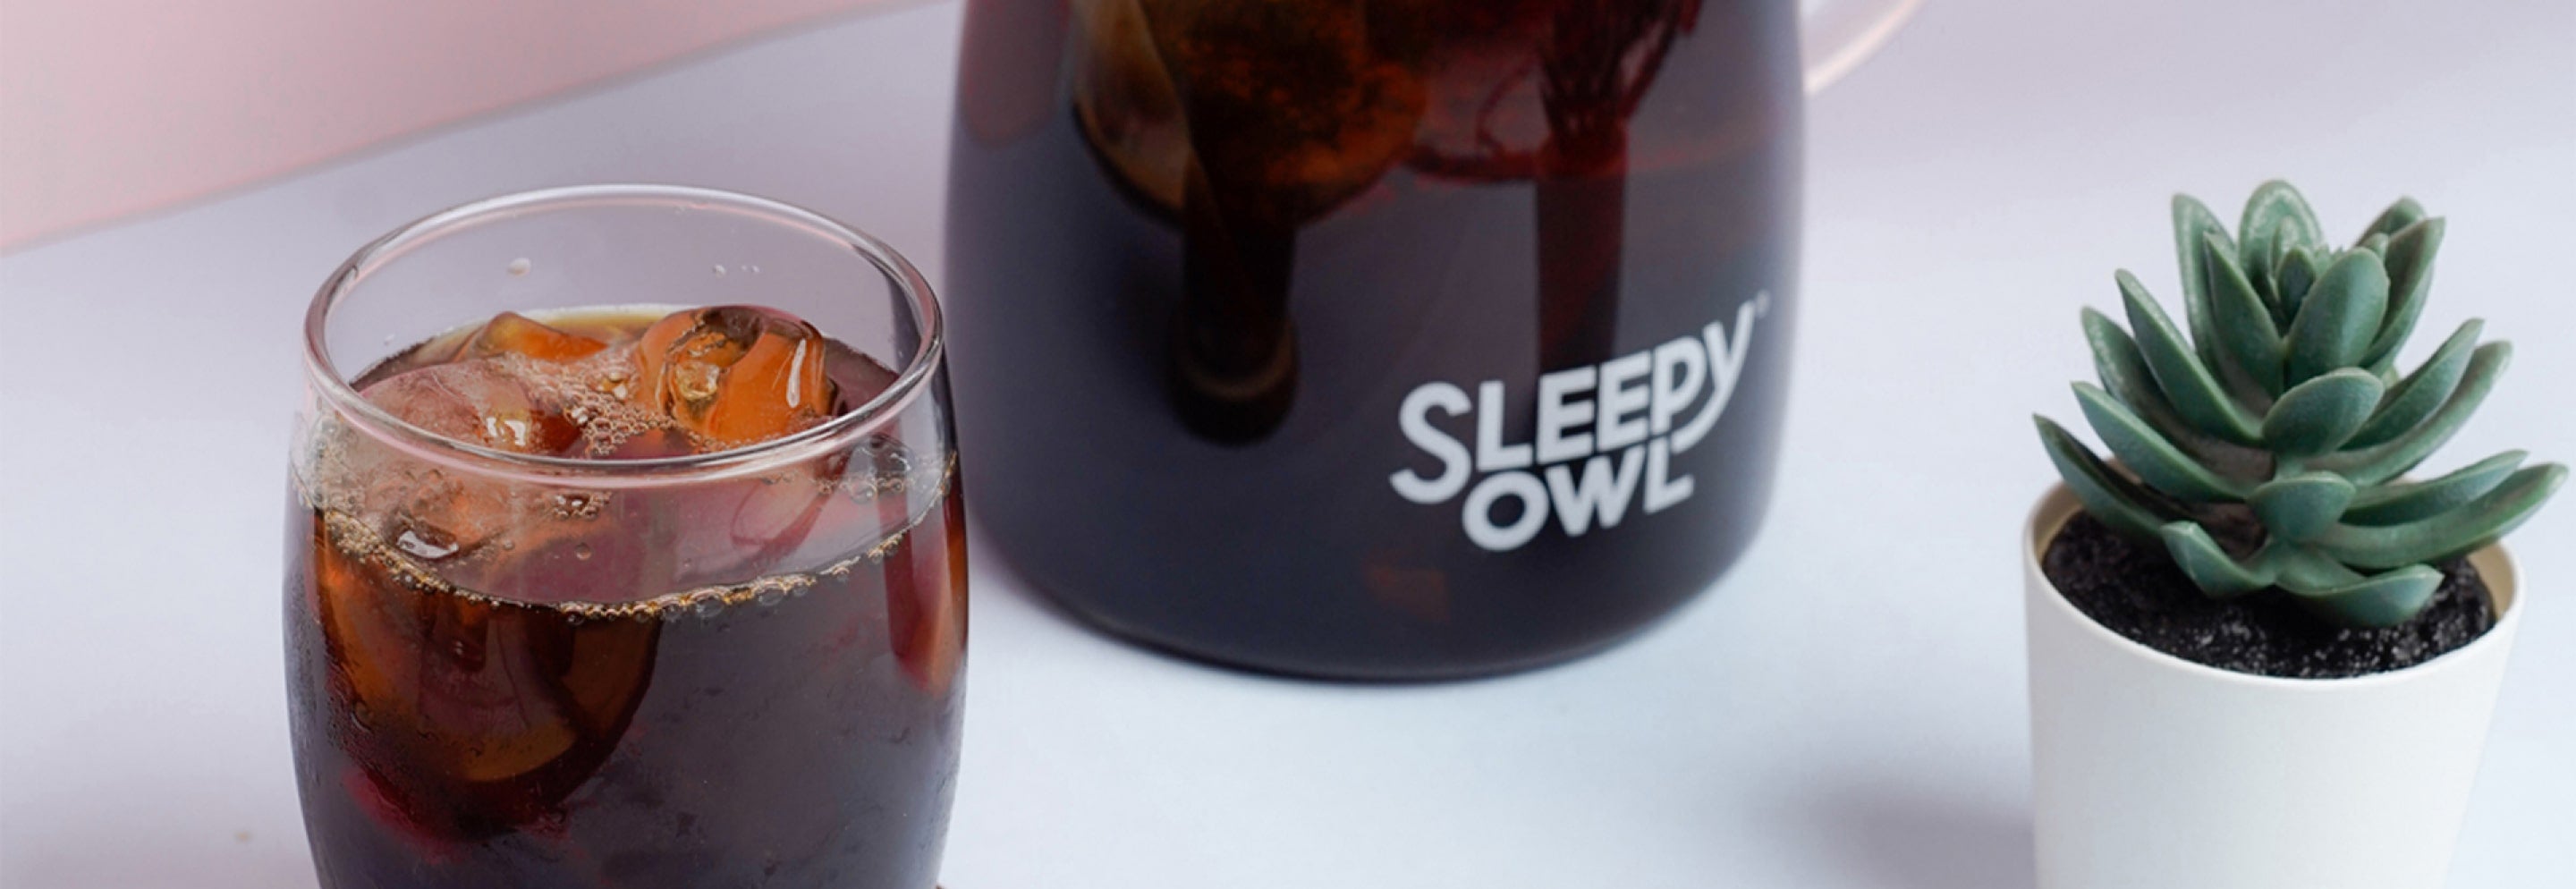 Sleepy Owl-Best Cold Brew Coffee 